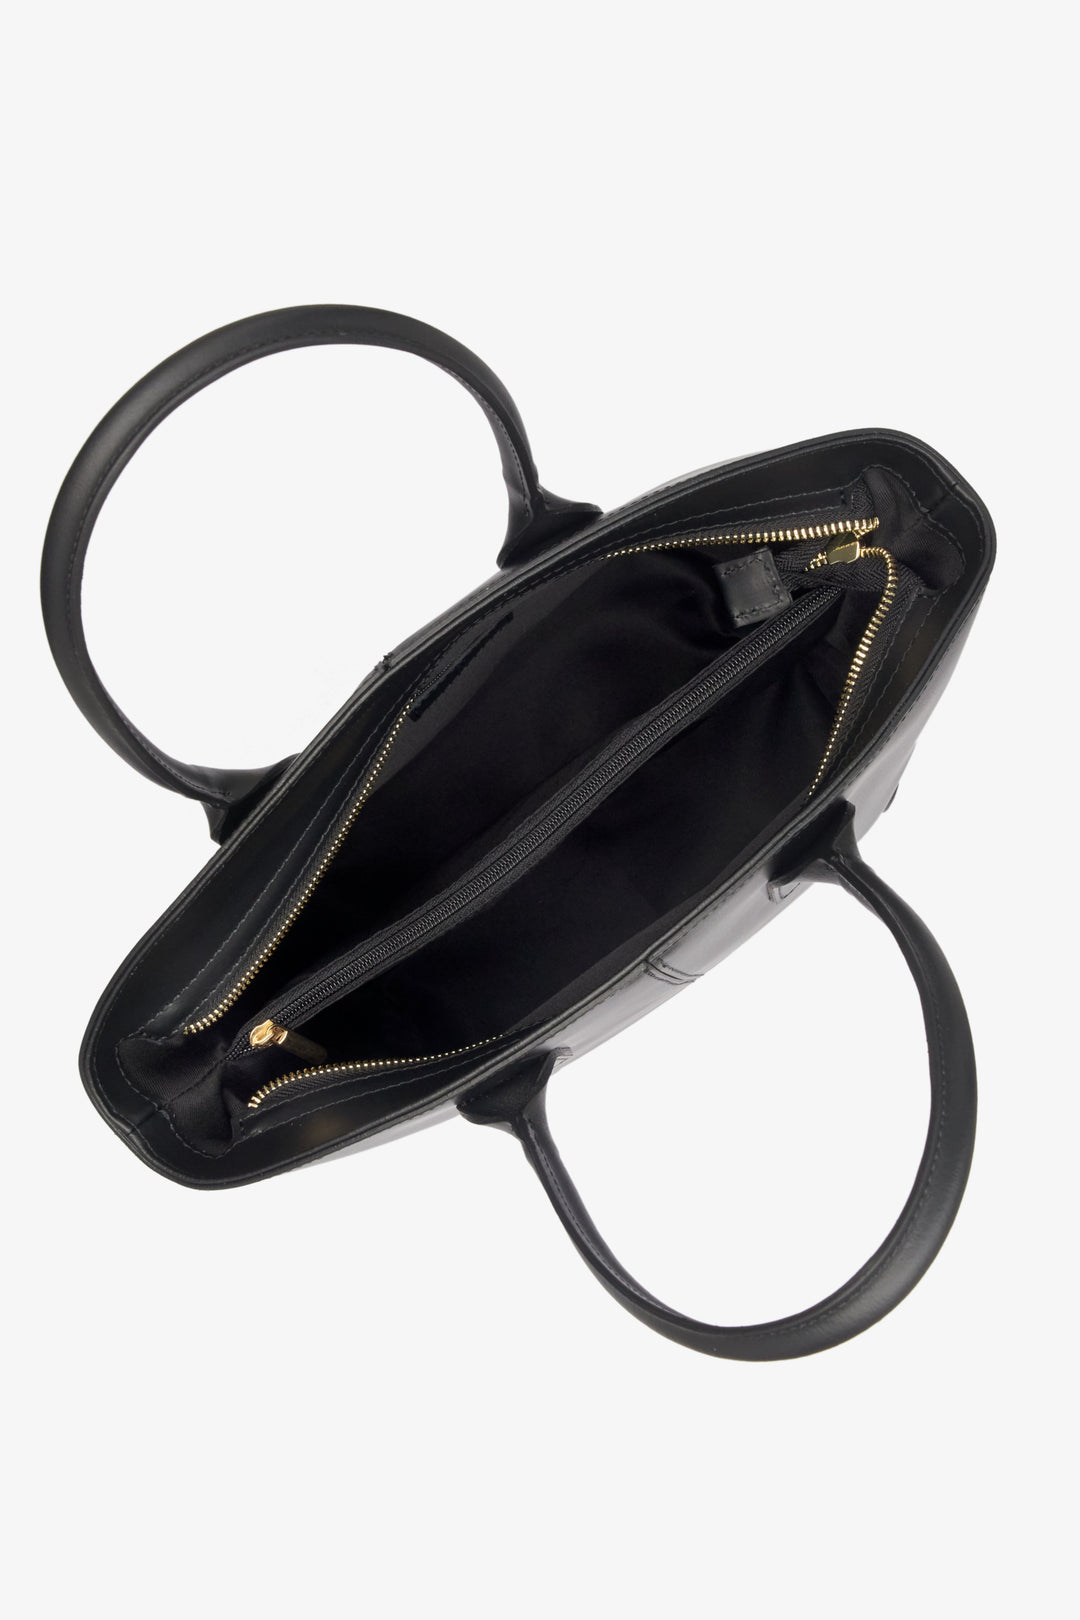 Estro black leather women's shopper bag - close-up on the interior details of the model.